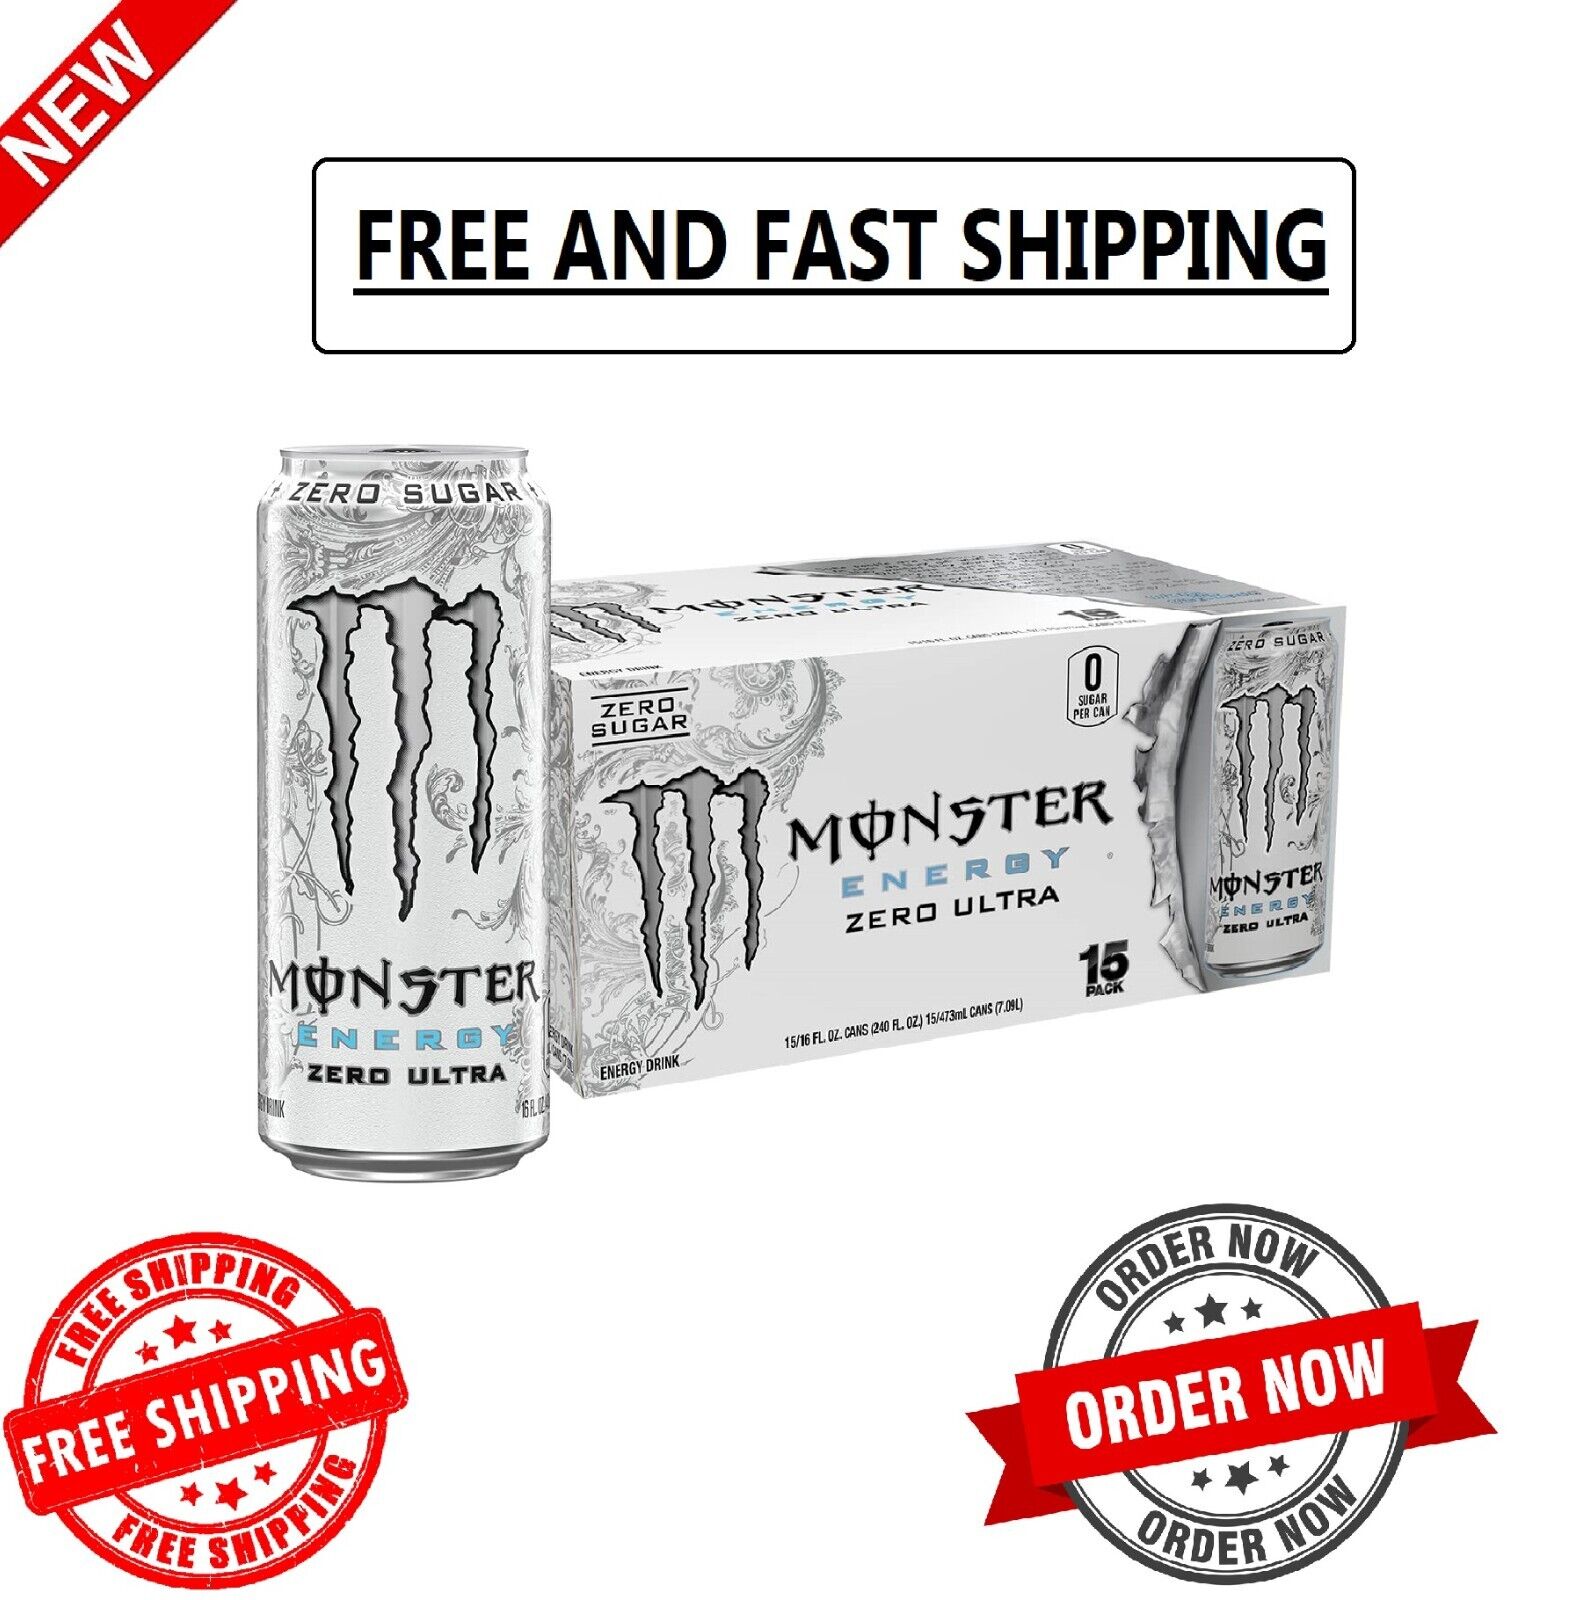 Monster Energy Zero Ultra, Sugar Free Energy Drink, 16 Ounce (Pack of 15)